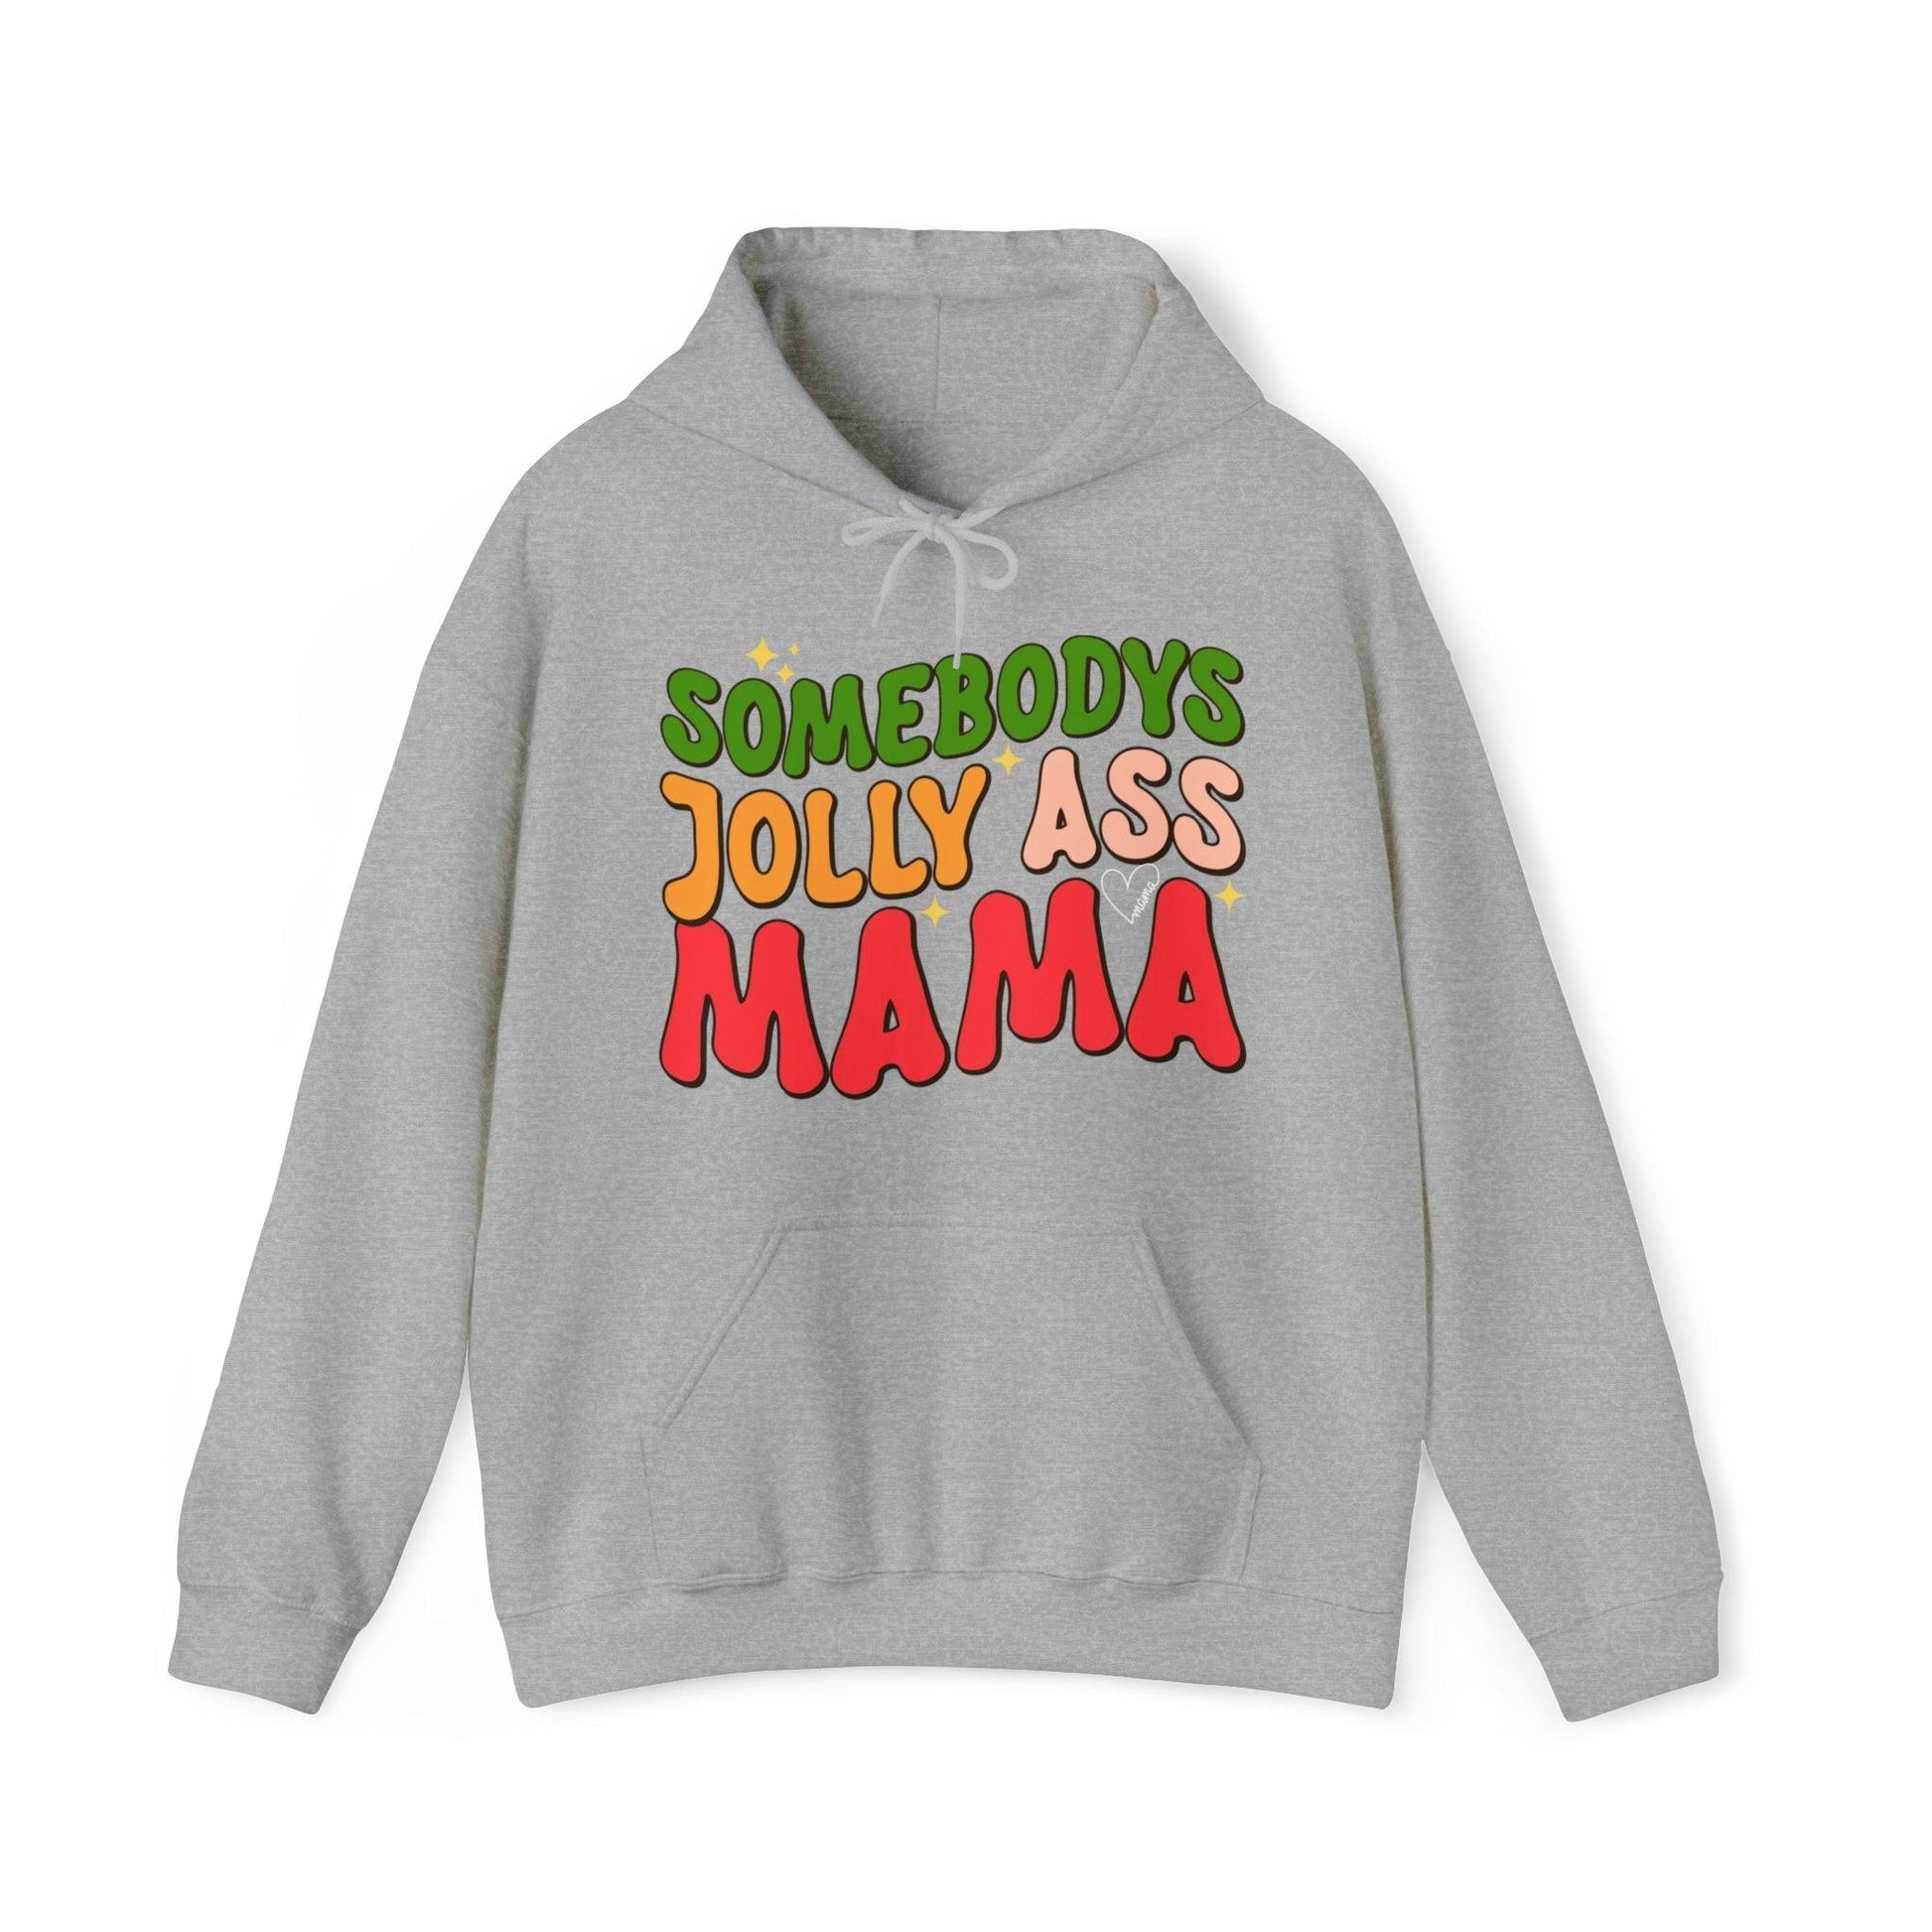 Jolly Ass MAMA Christmas Hooded Sweatshirt